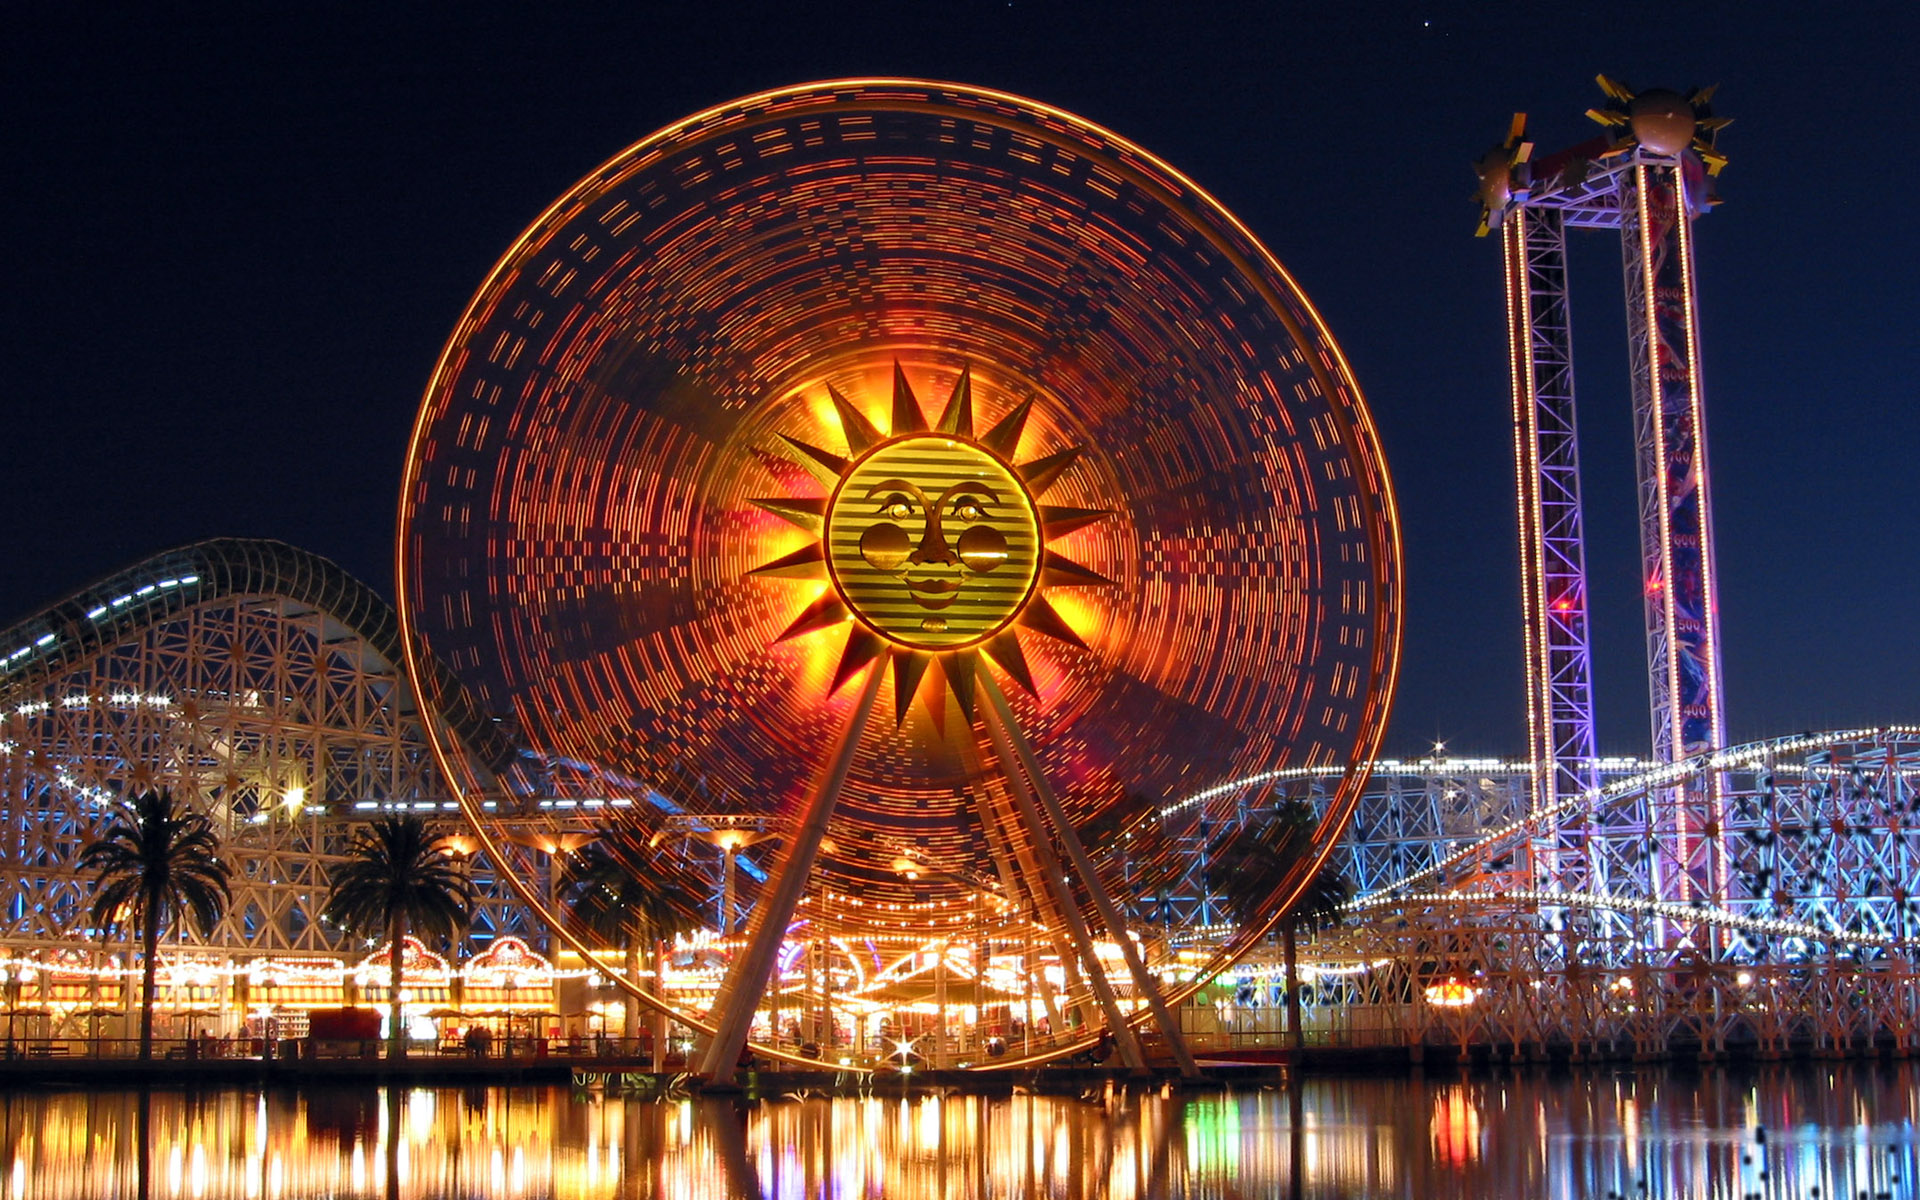 The Sun Wheel's Face at Paradise Pier in Anaheim, California